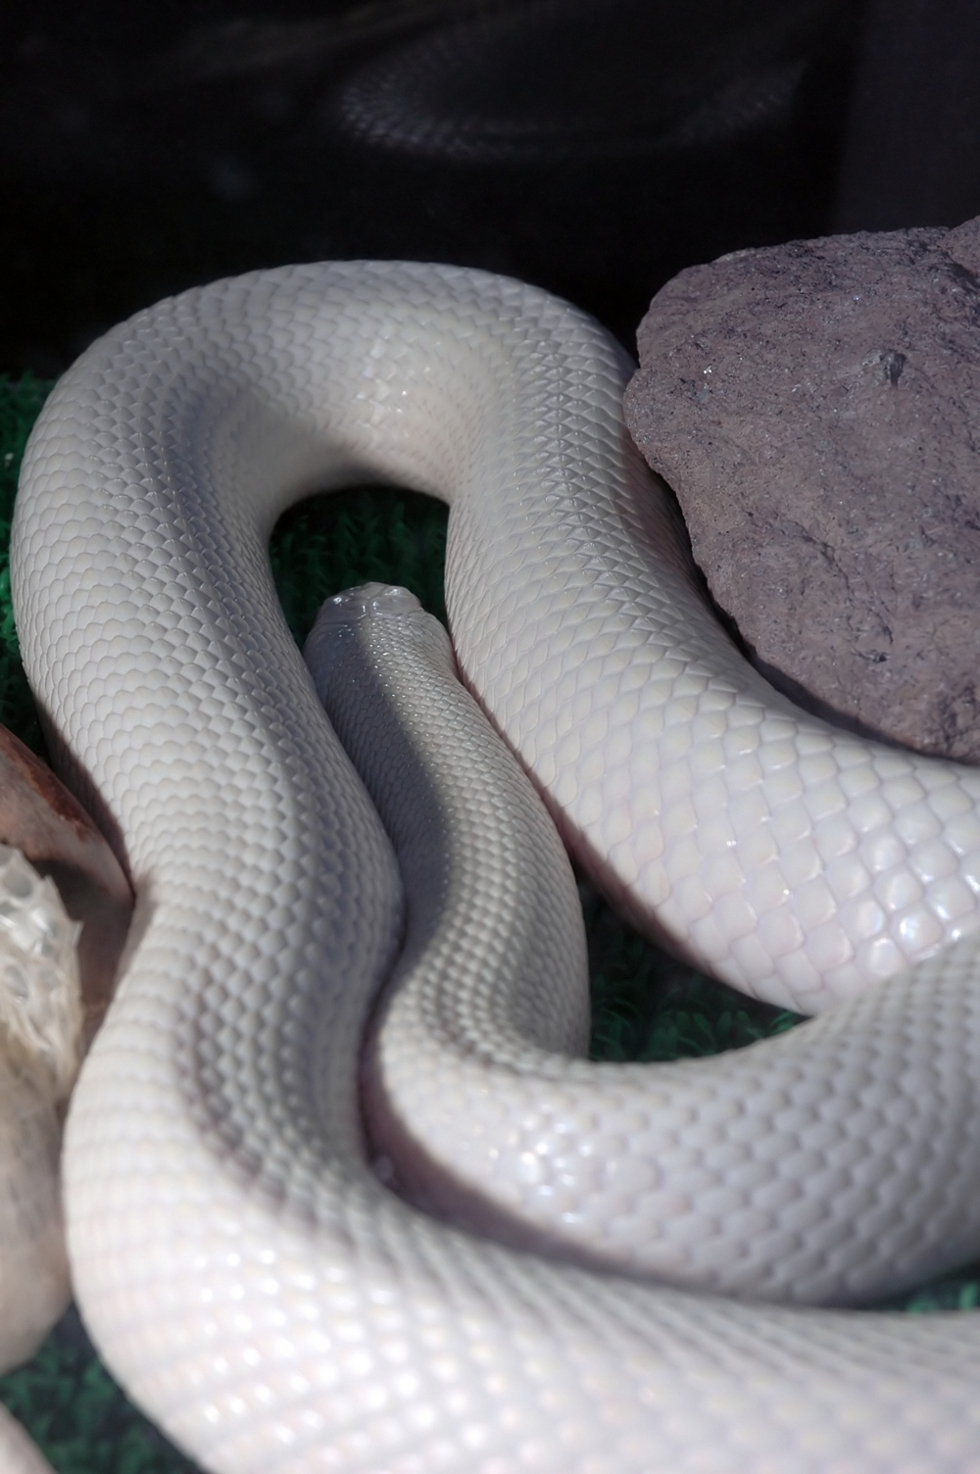 Magnifique serpent albinos